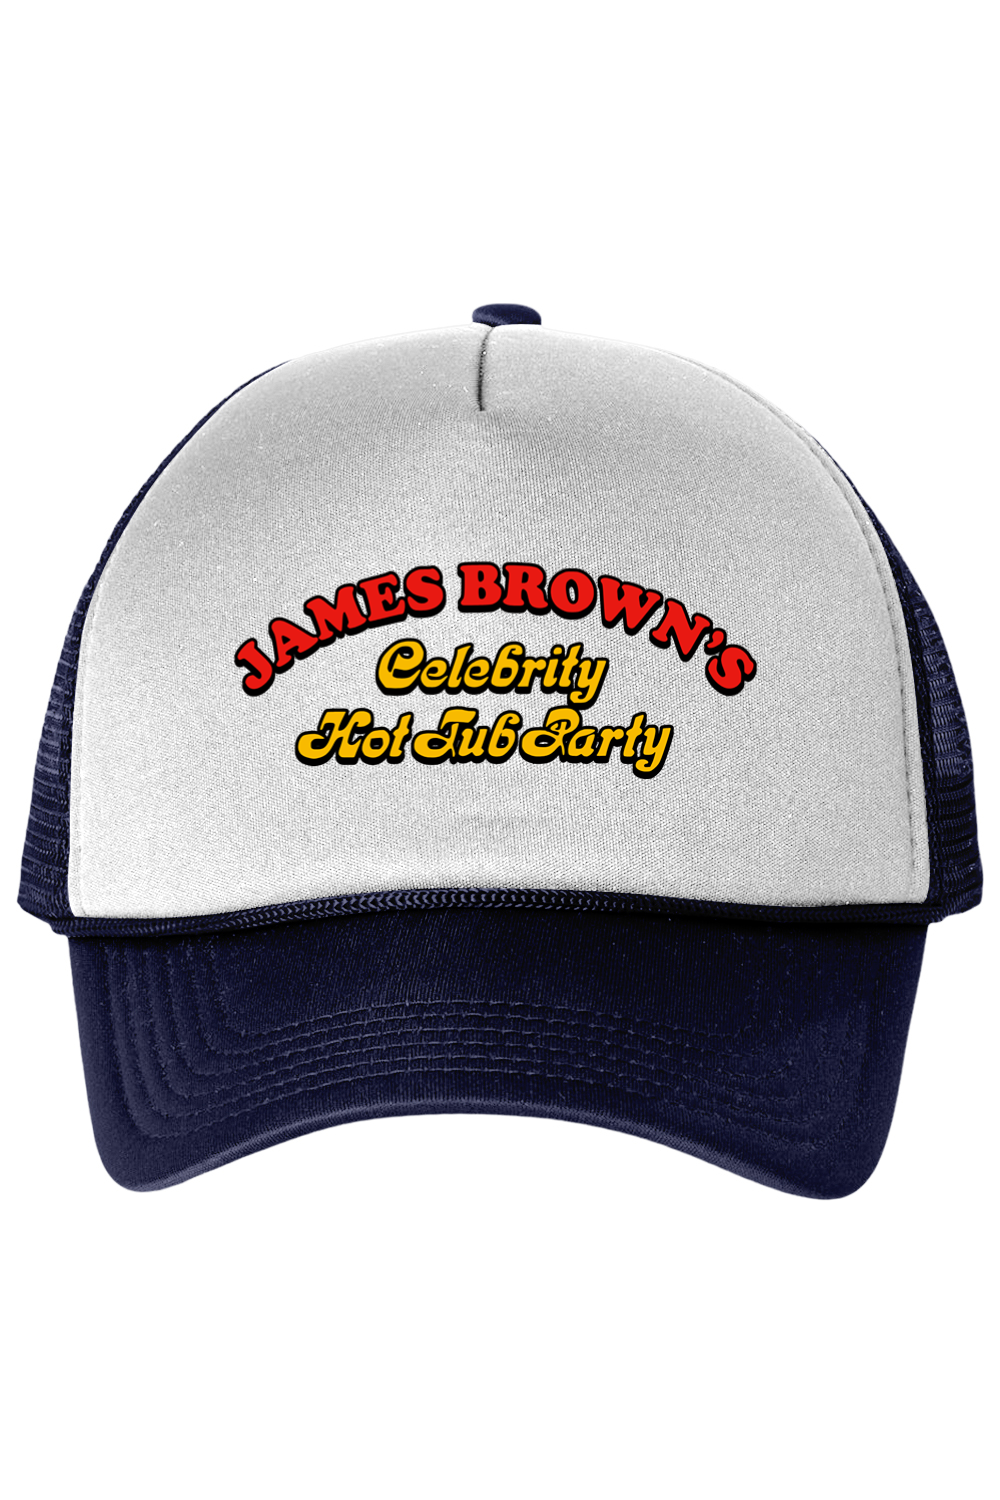 James Brown's Celebrity Hot Tub - Trucker Cap - Yinzylvania